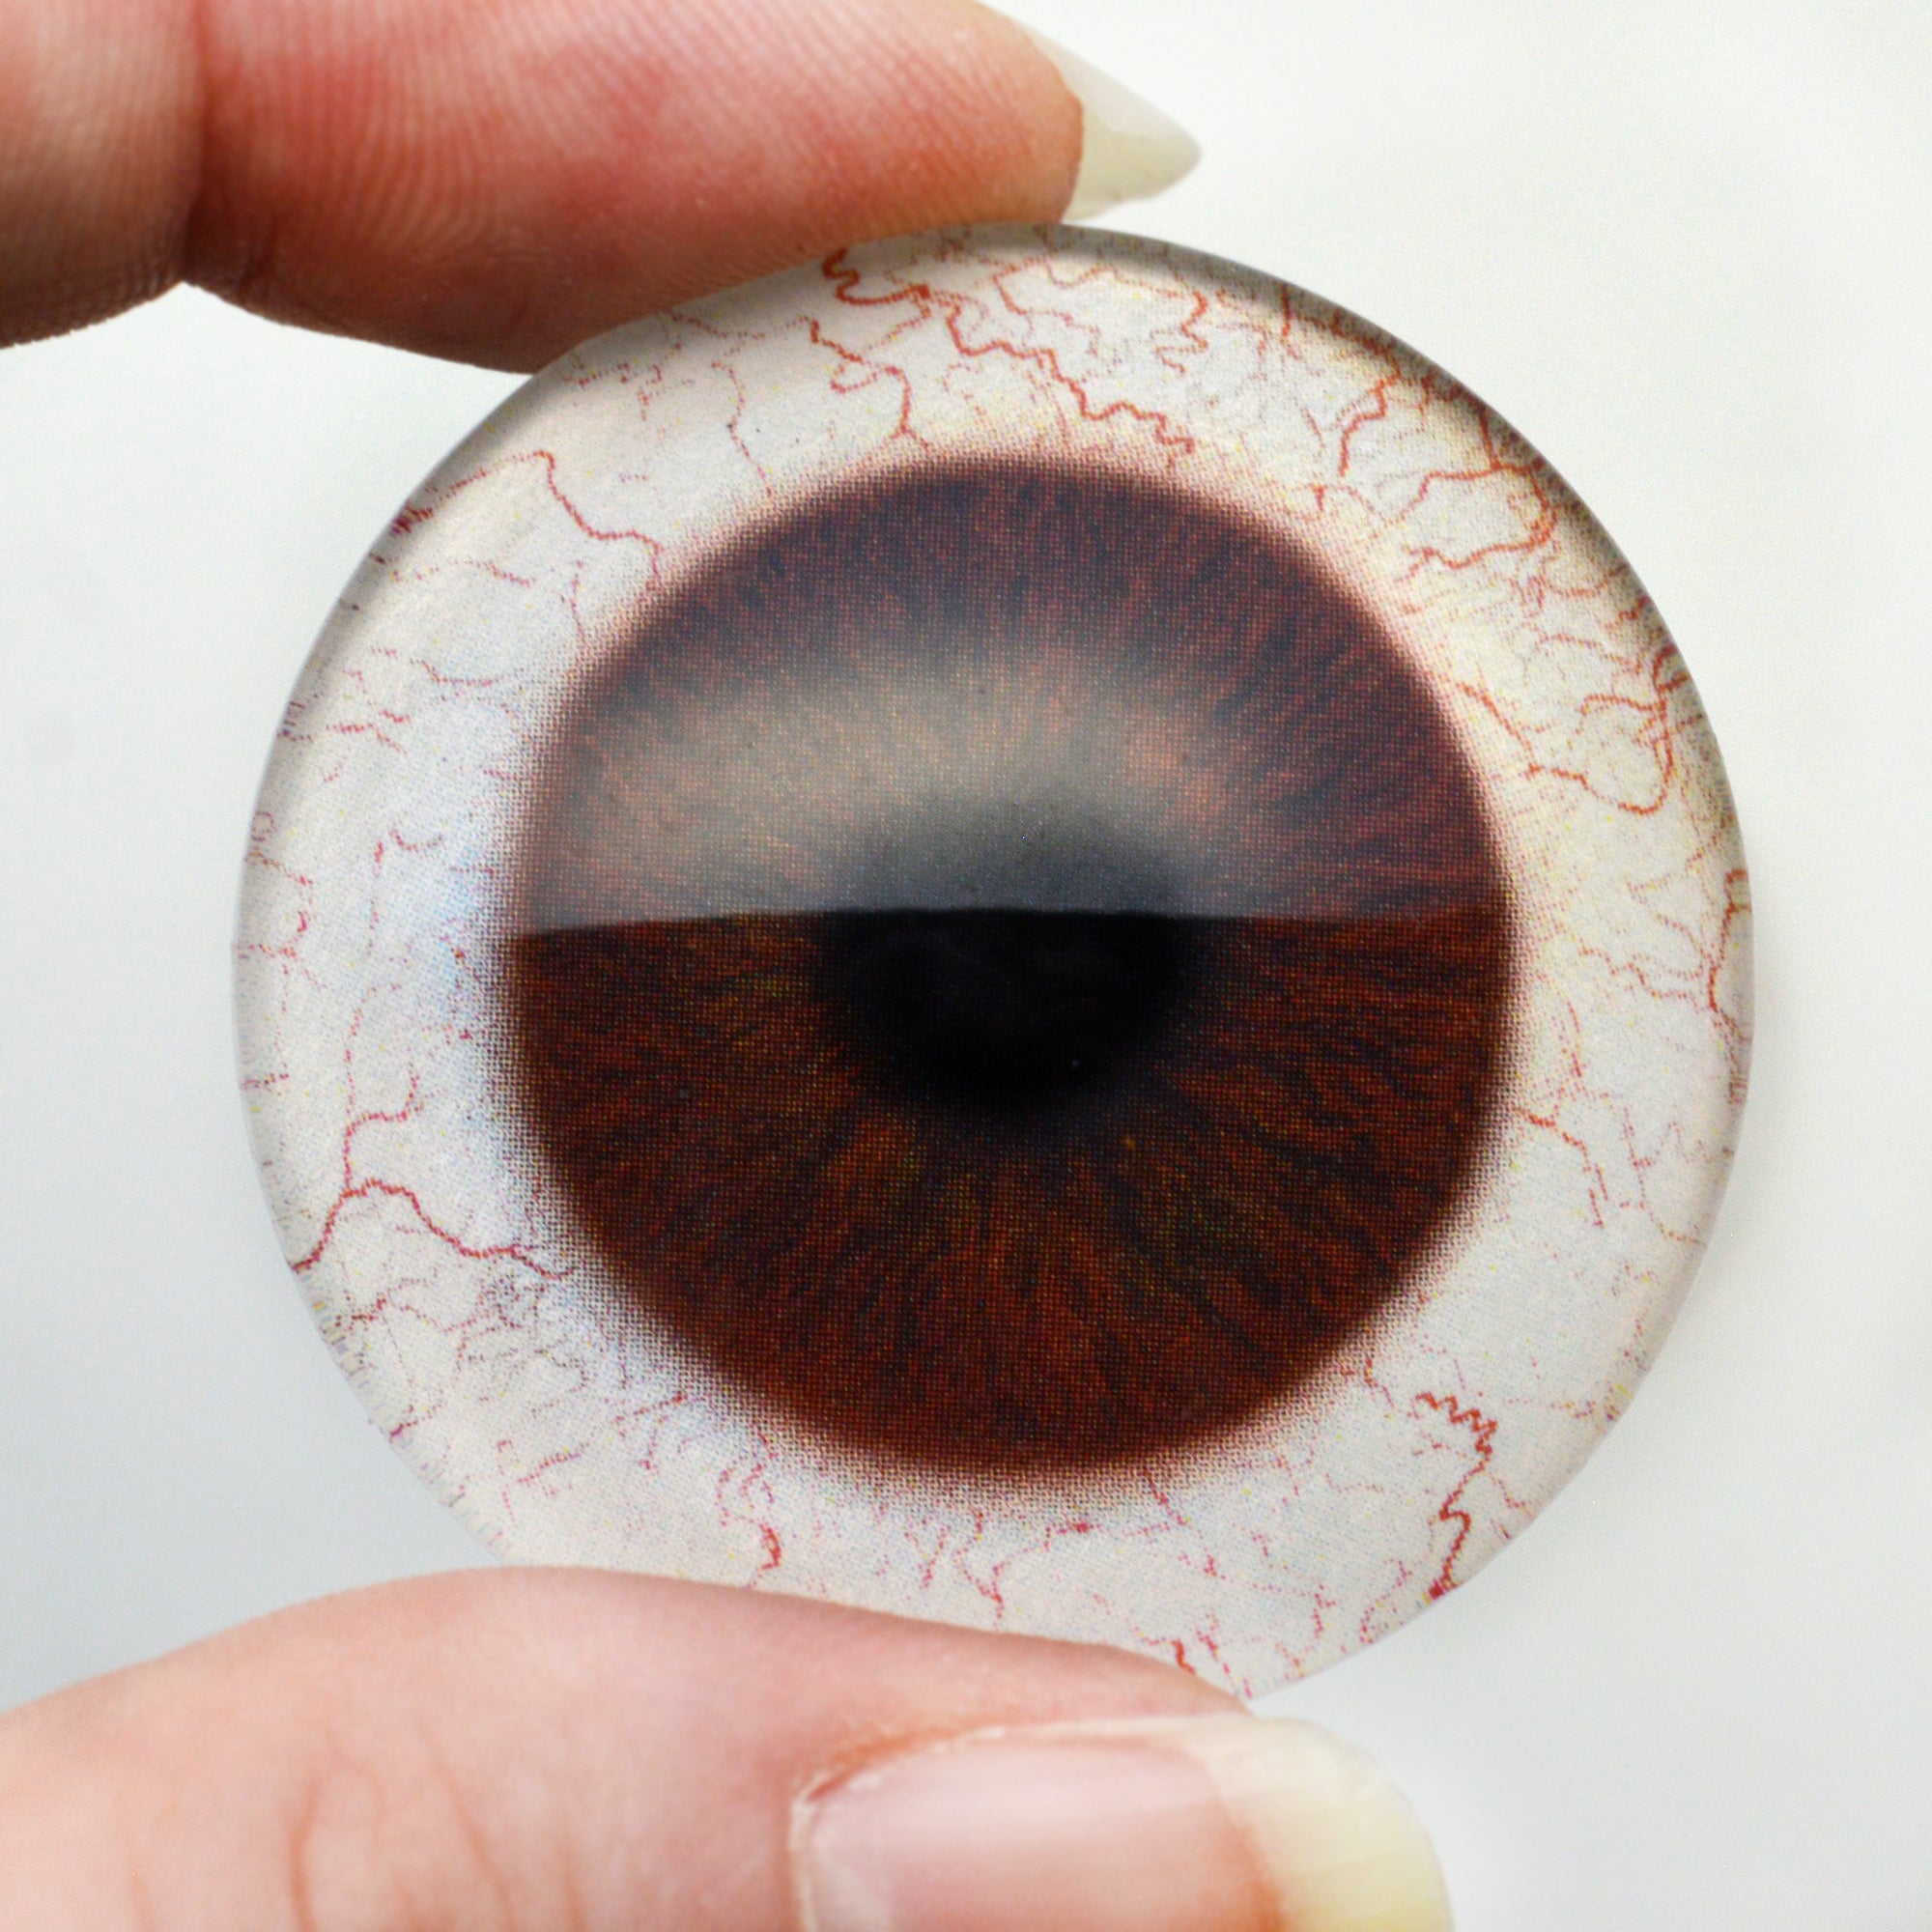 Realistic Human Eyeballs